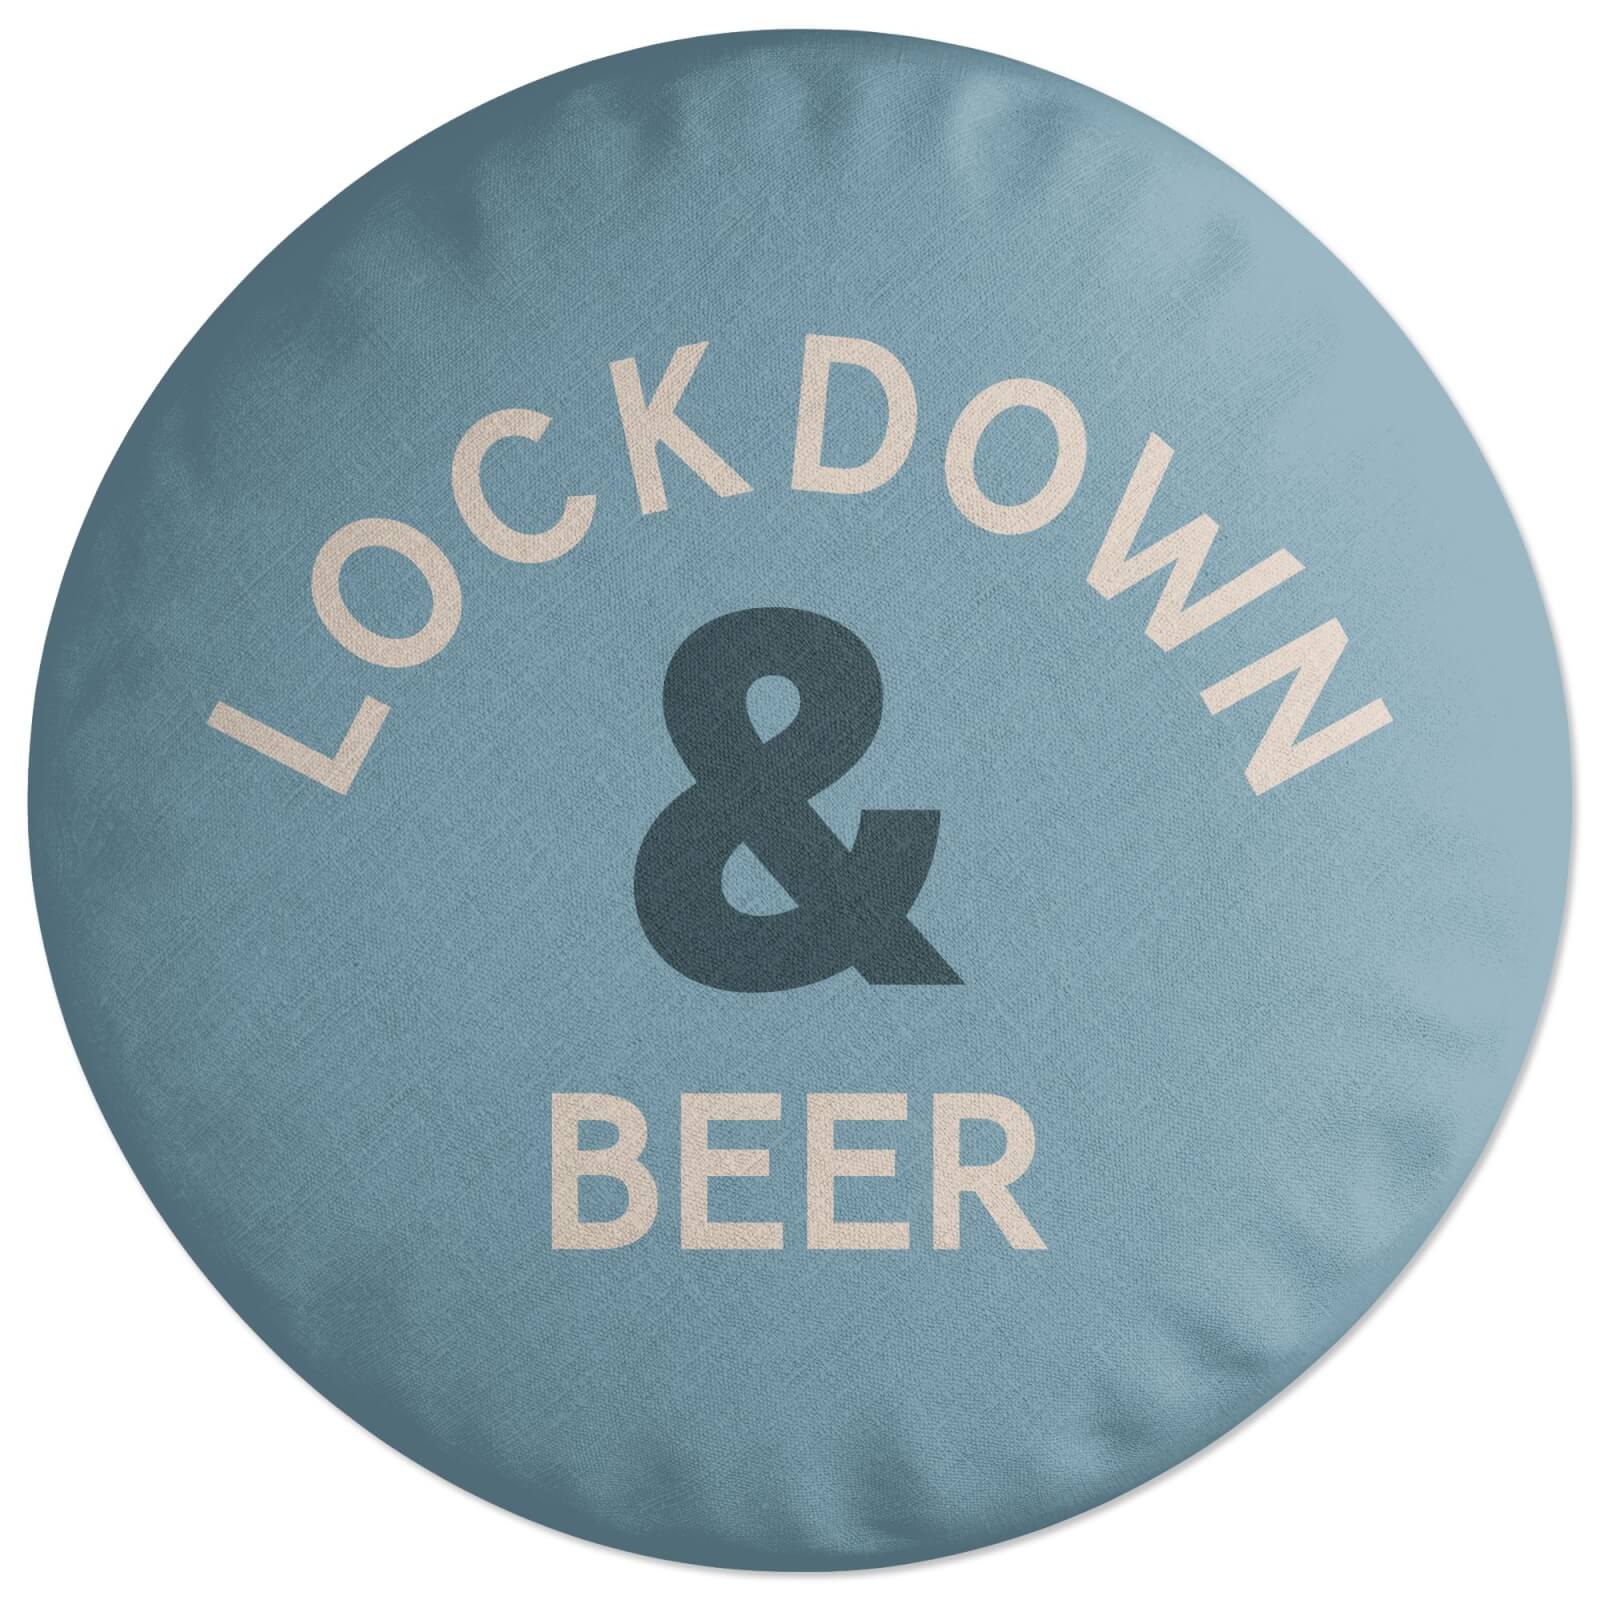 Lockdown & Beer Round Cushion